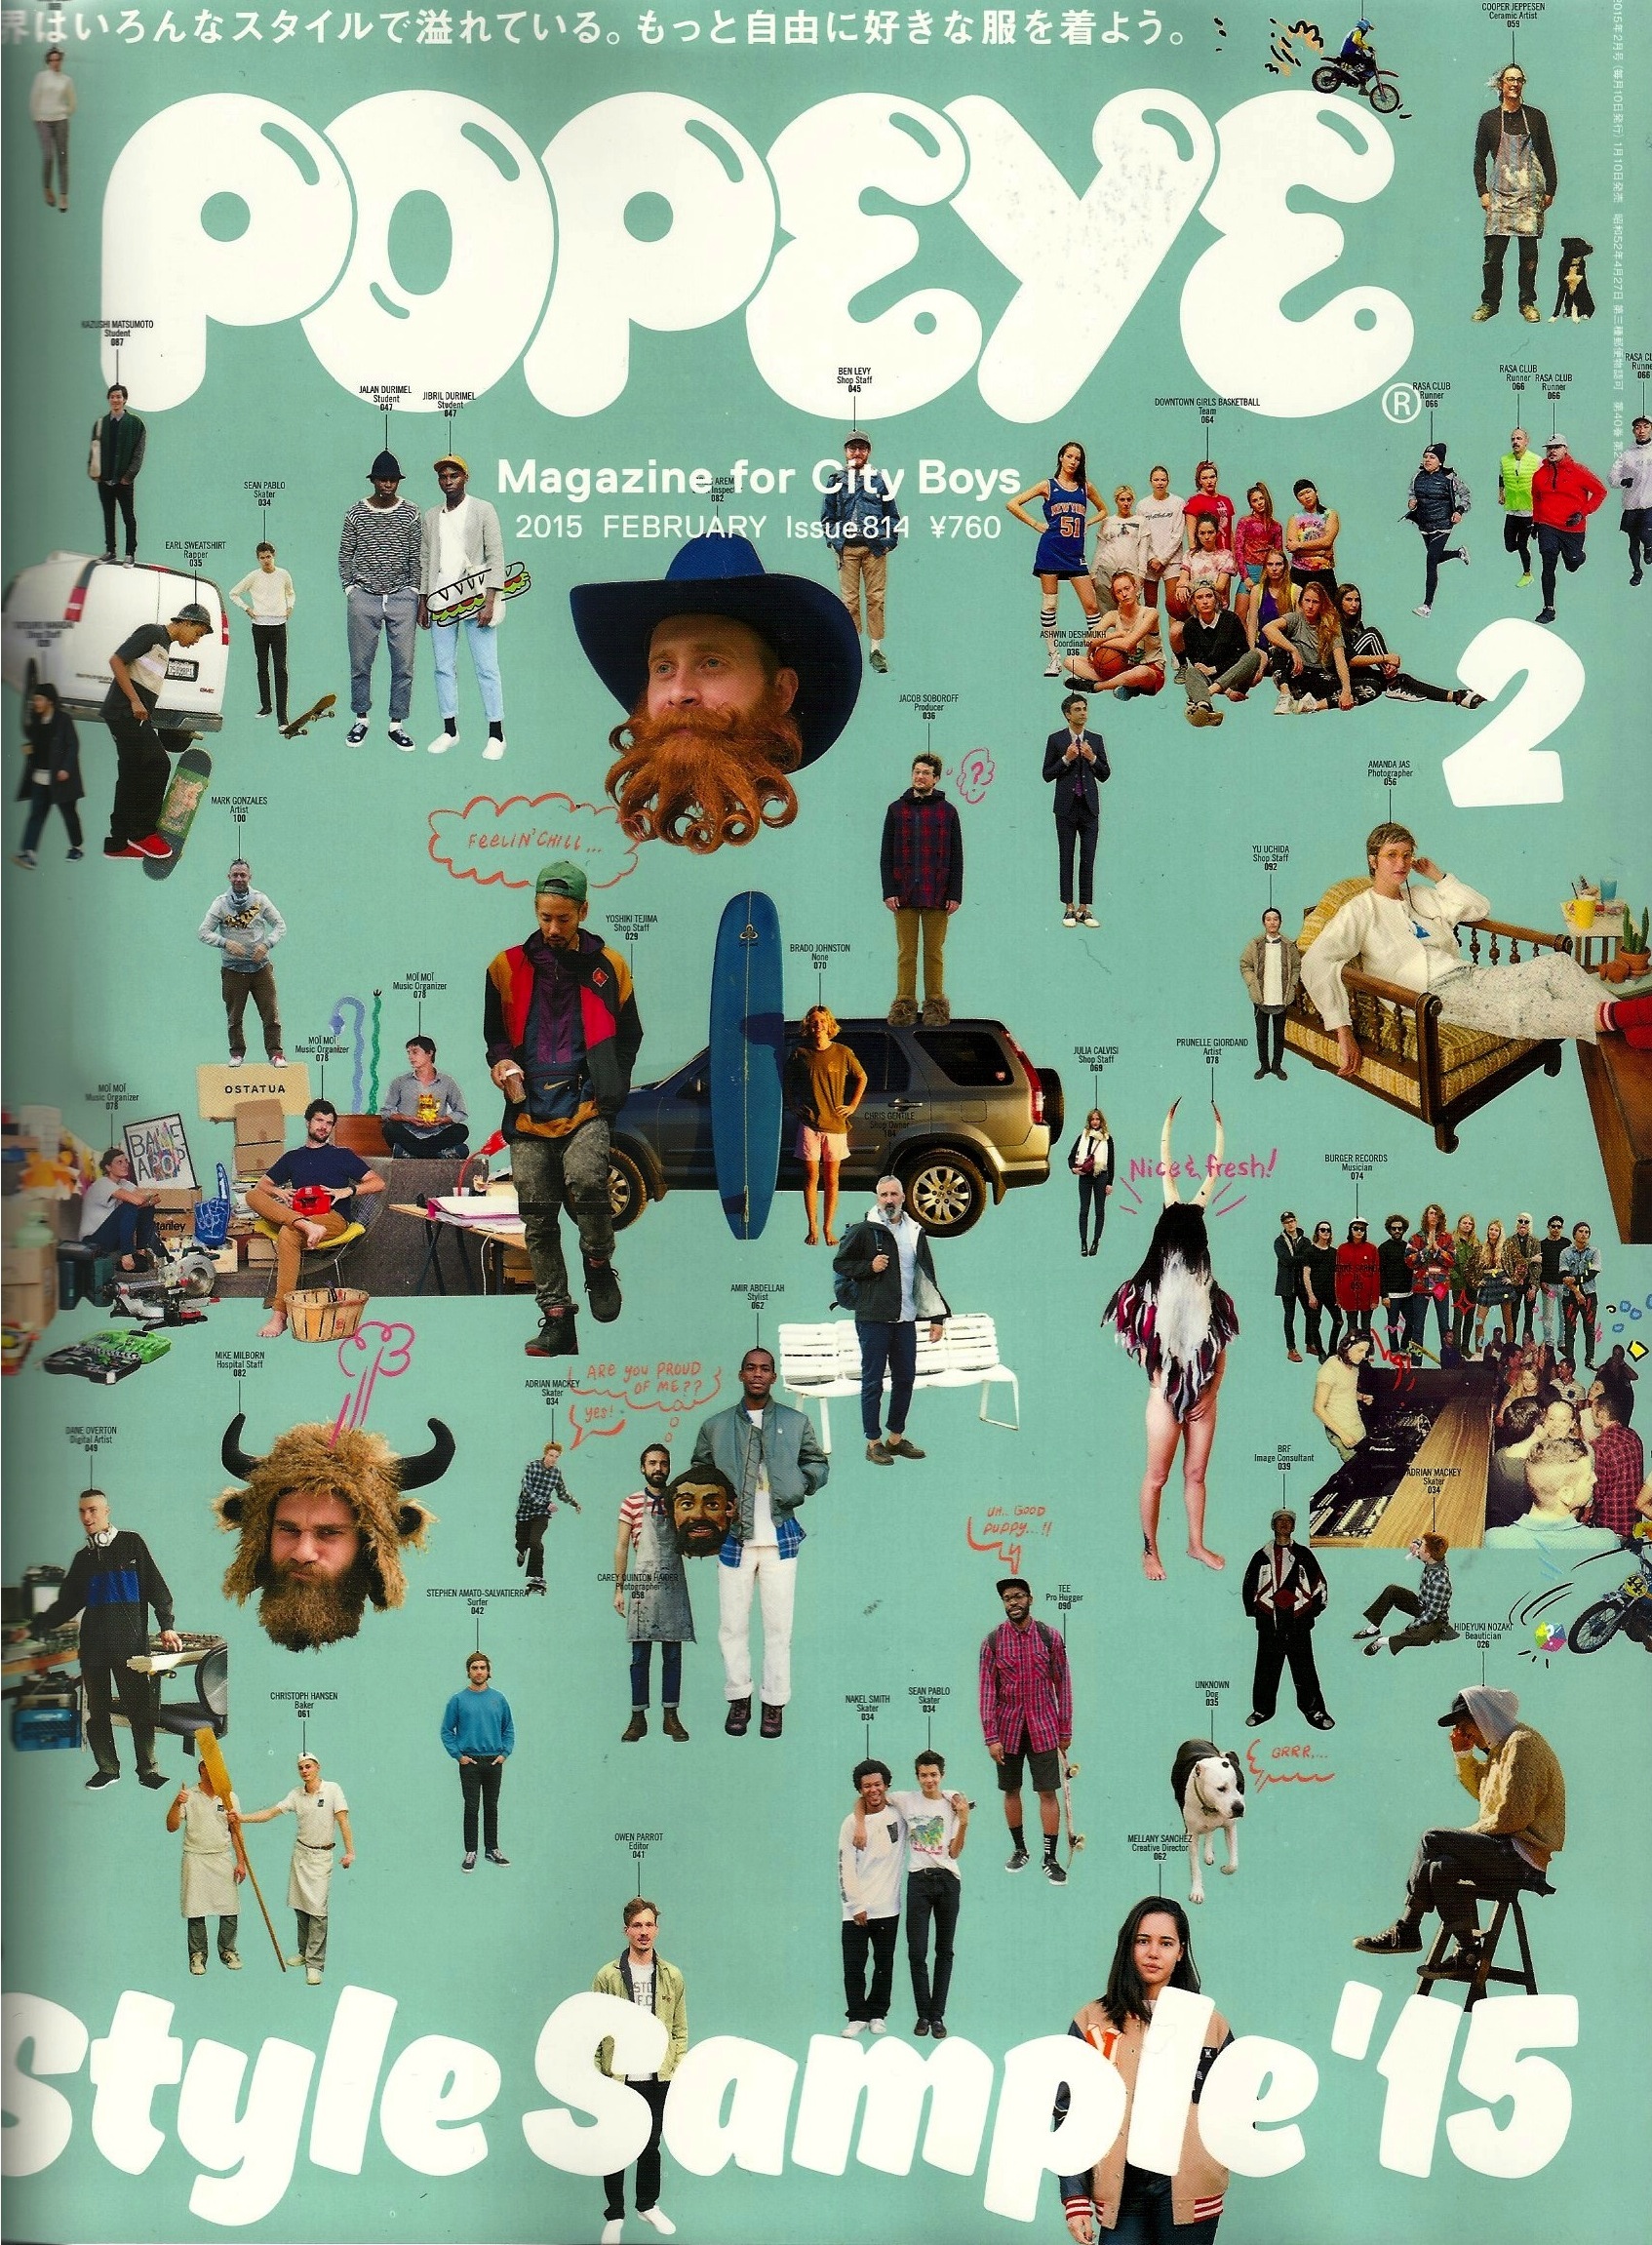 Popeye Magazine Old Joe Opening-1.jpg